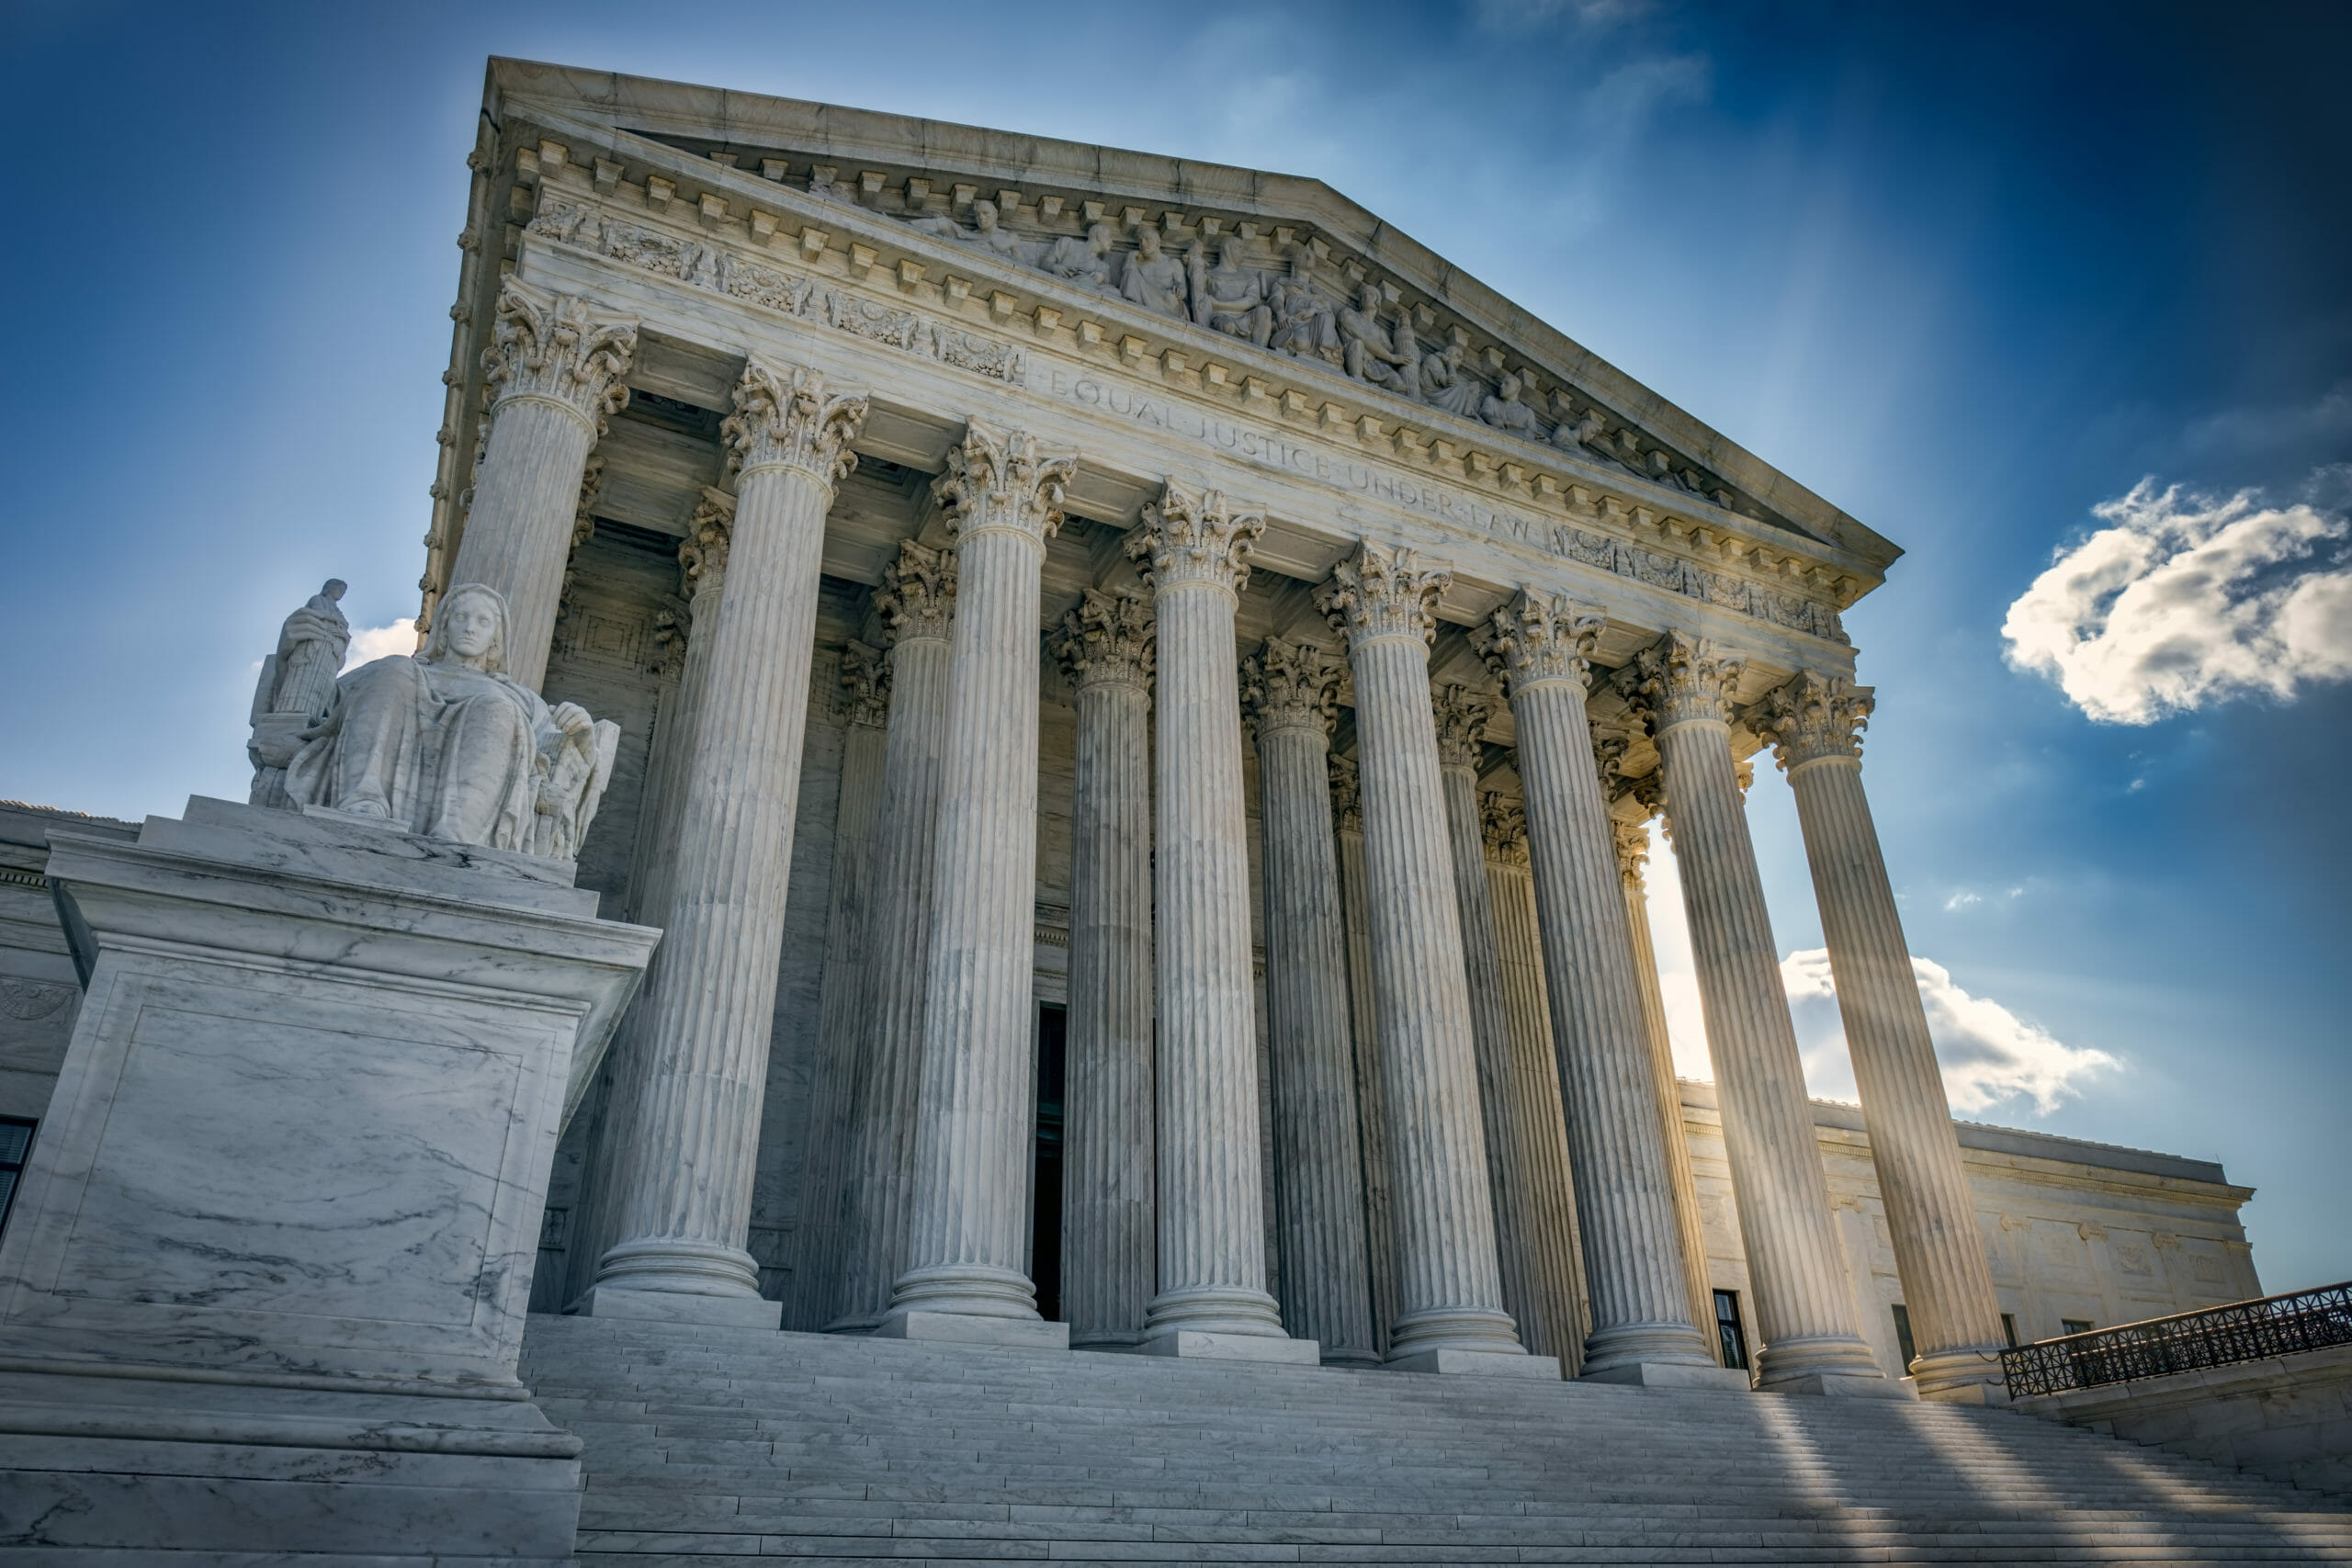 The Supreme Court against a blue sky backdrop.